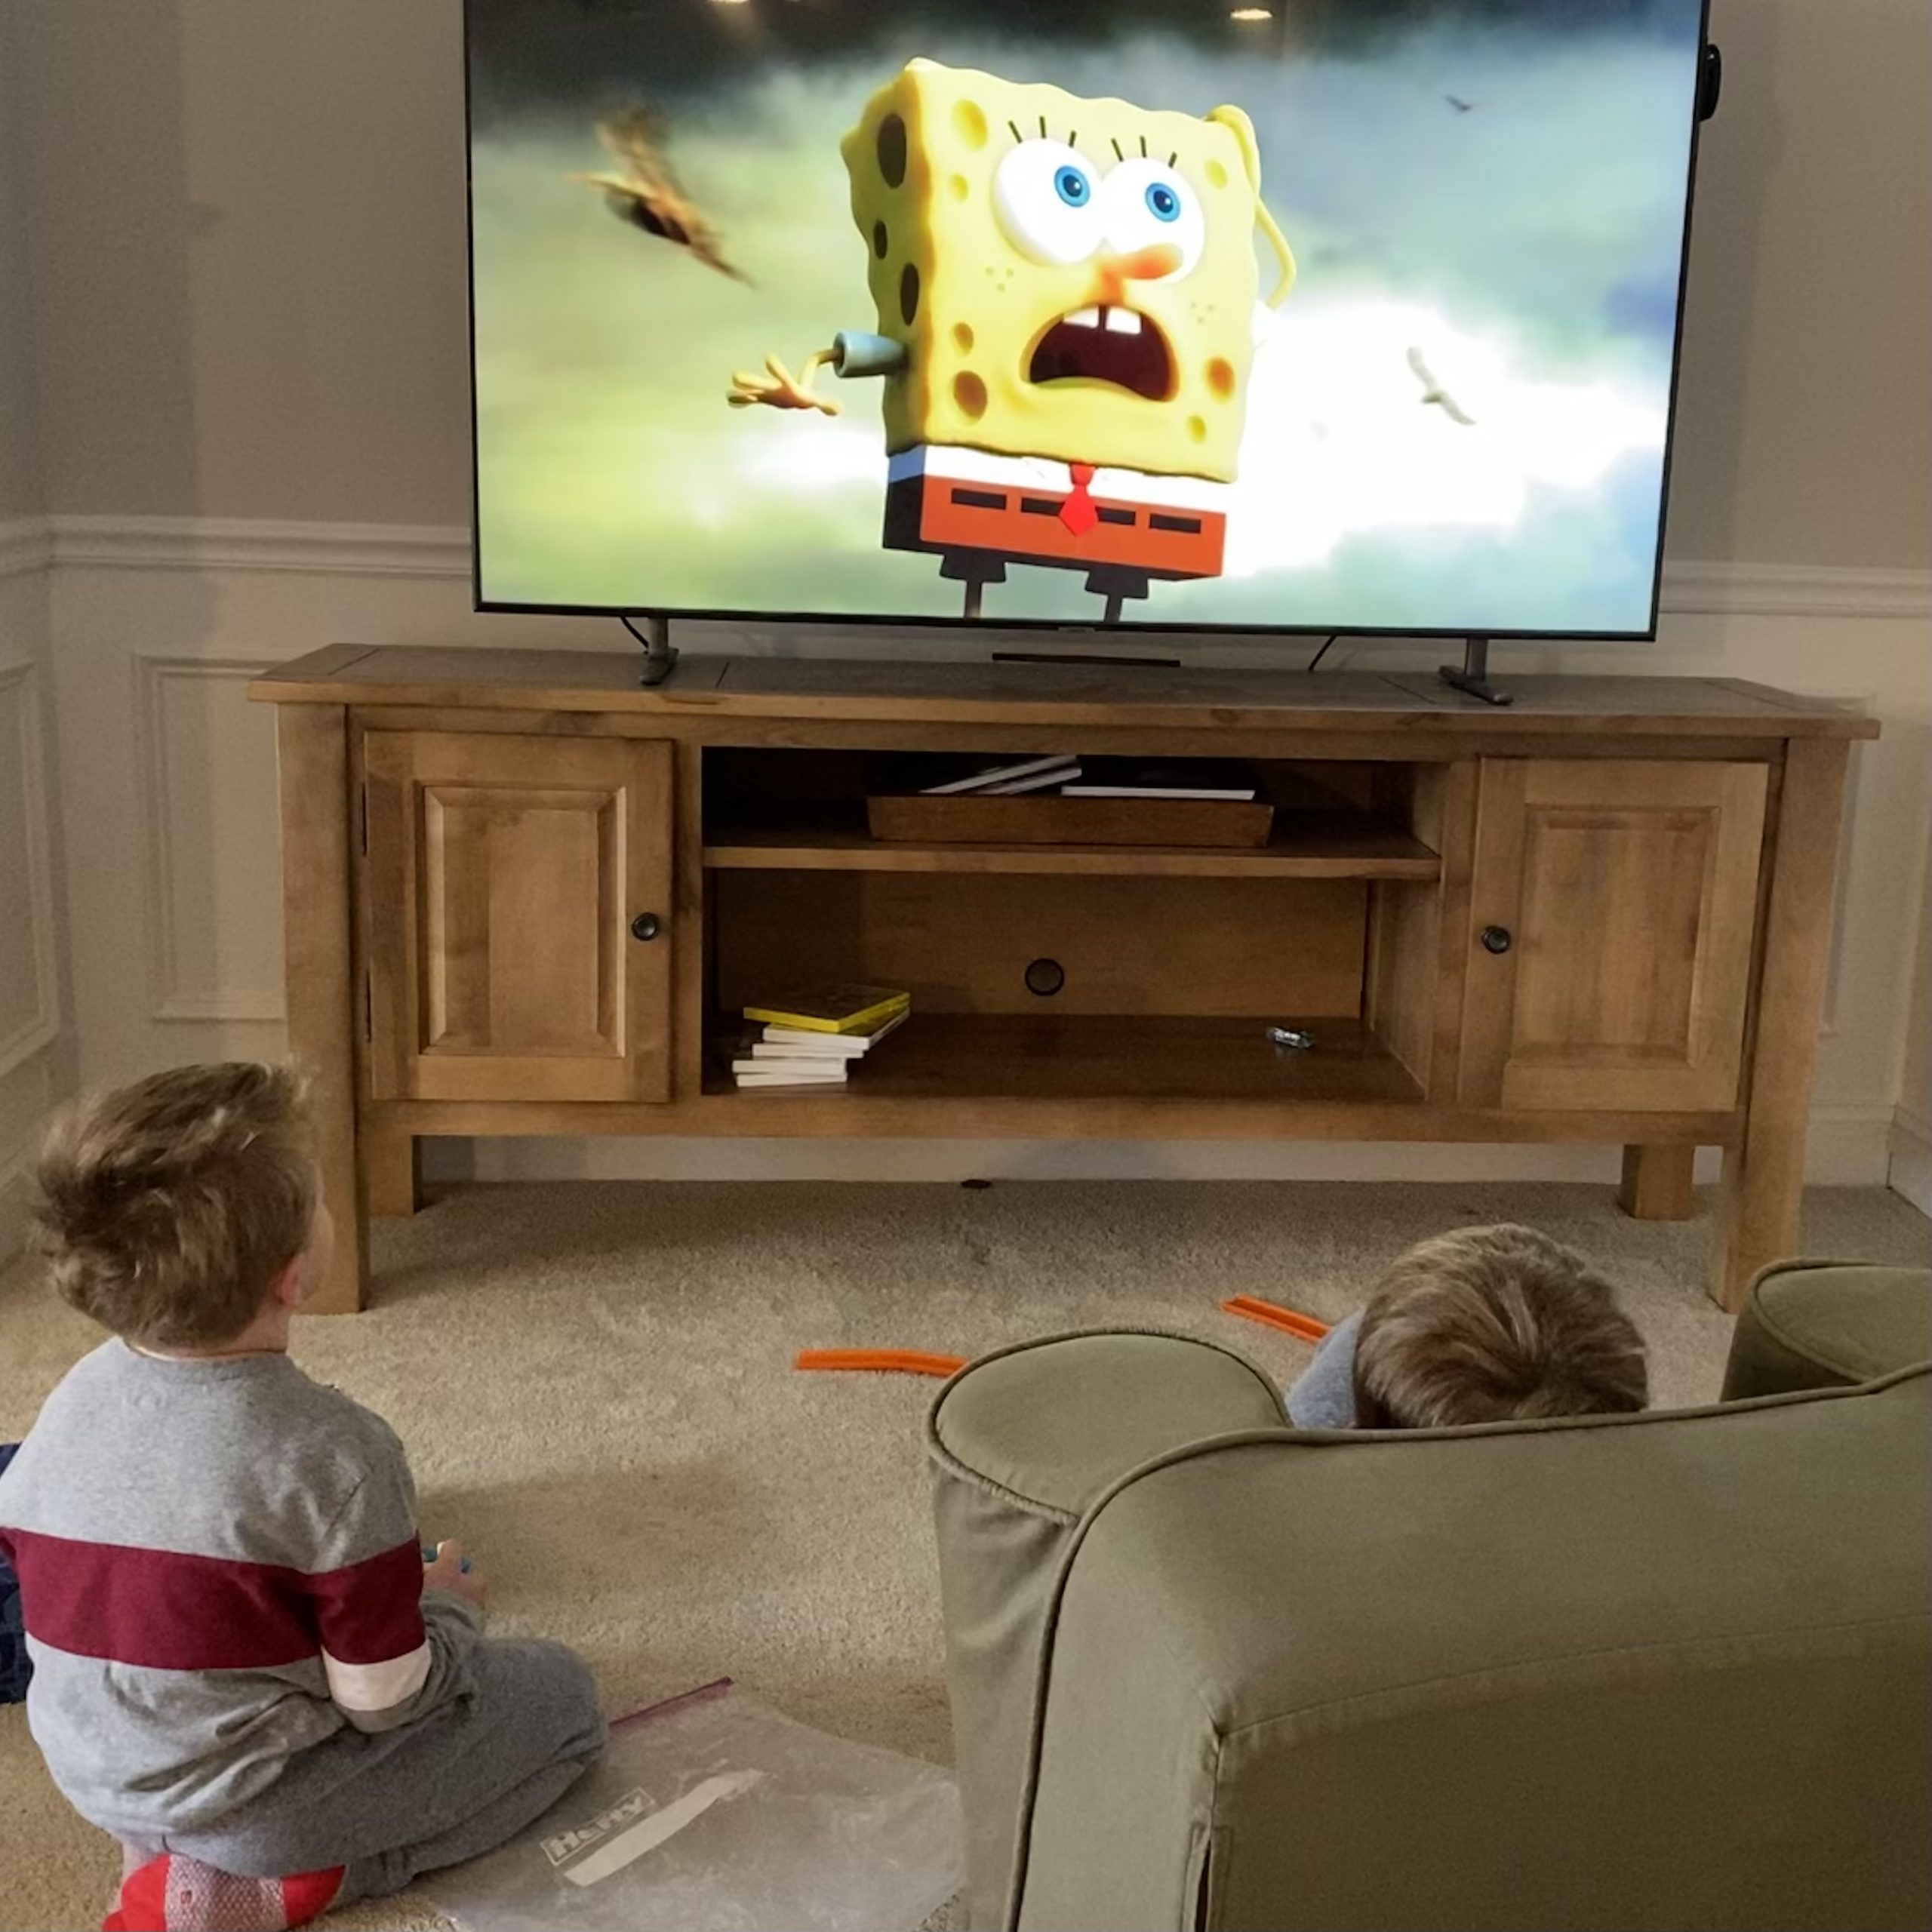 Two young boys sitting on the floor watching Spongebob Squarepants on TV. 